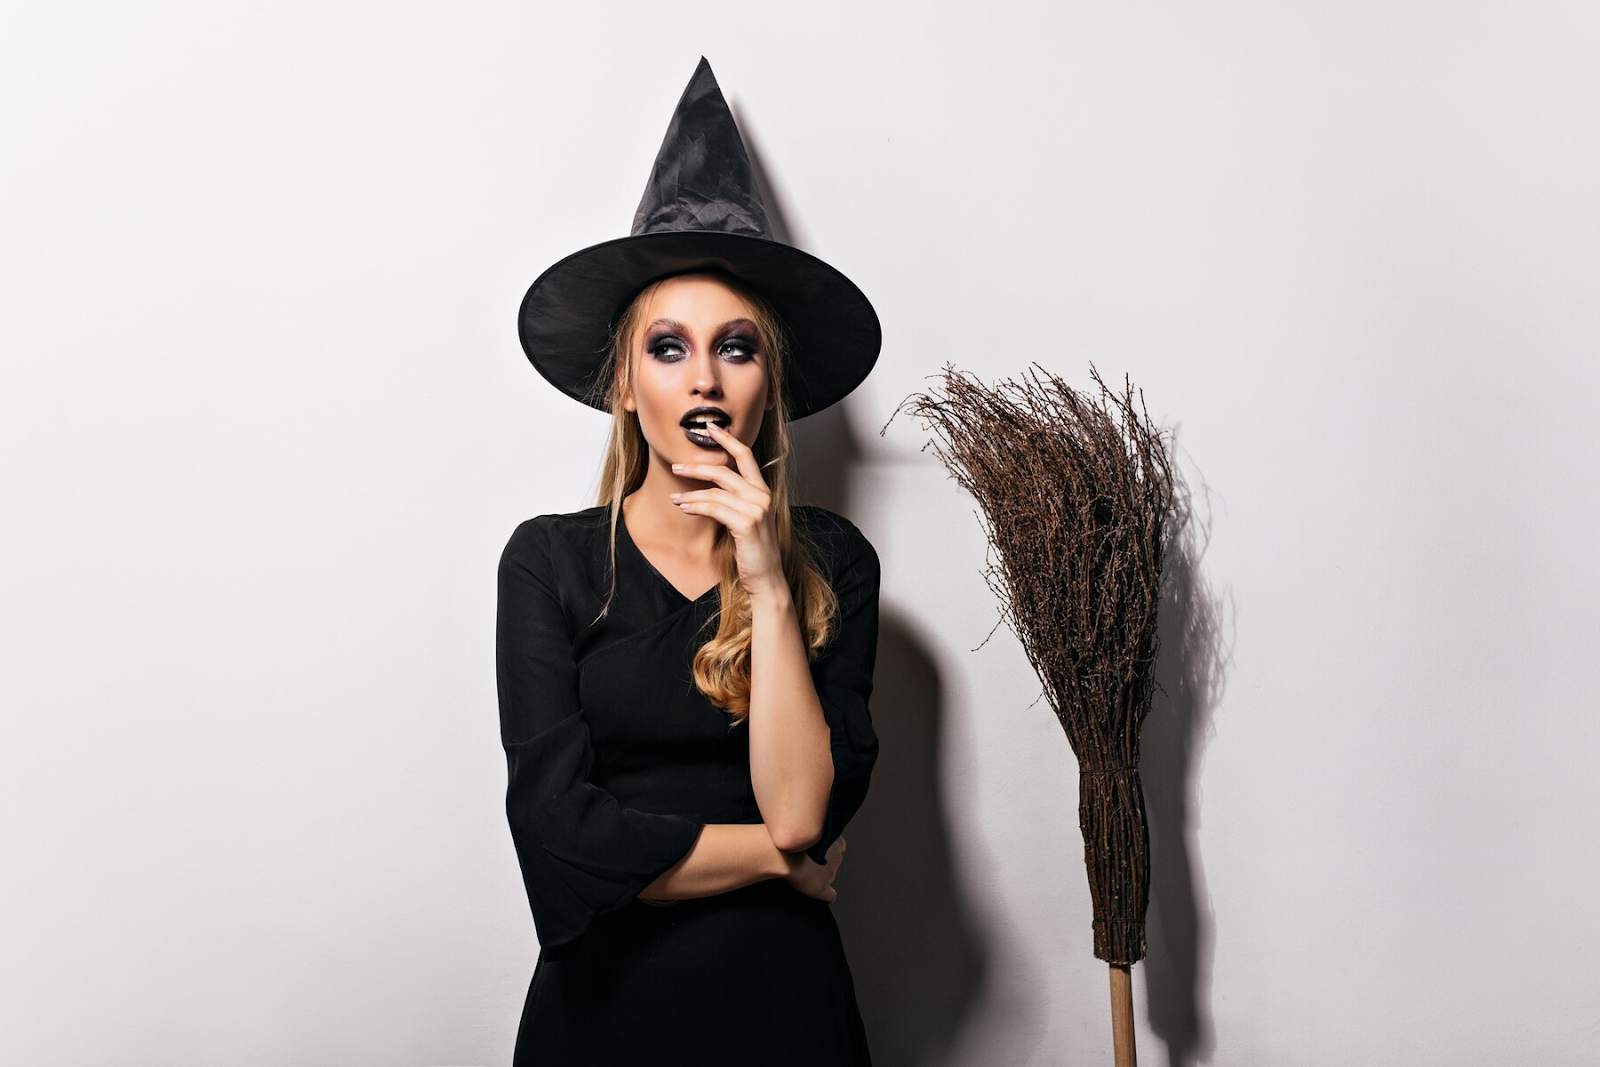 A woman wizard standing besides a broom.